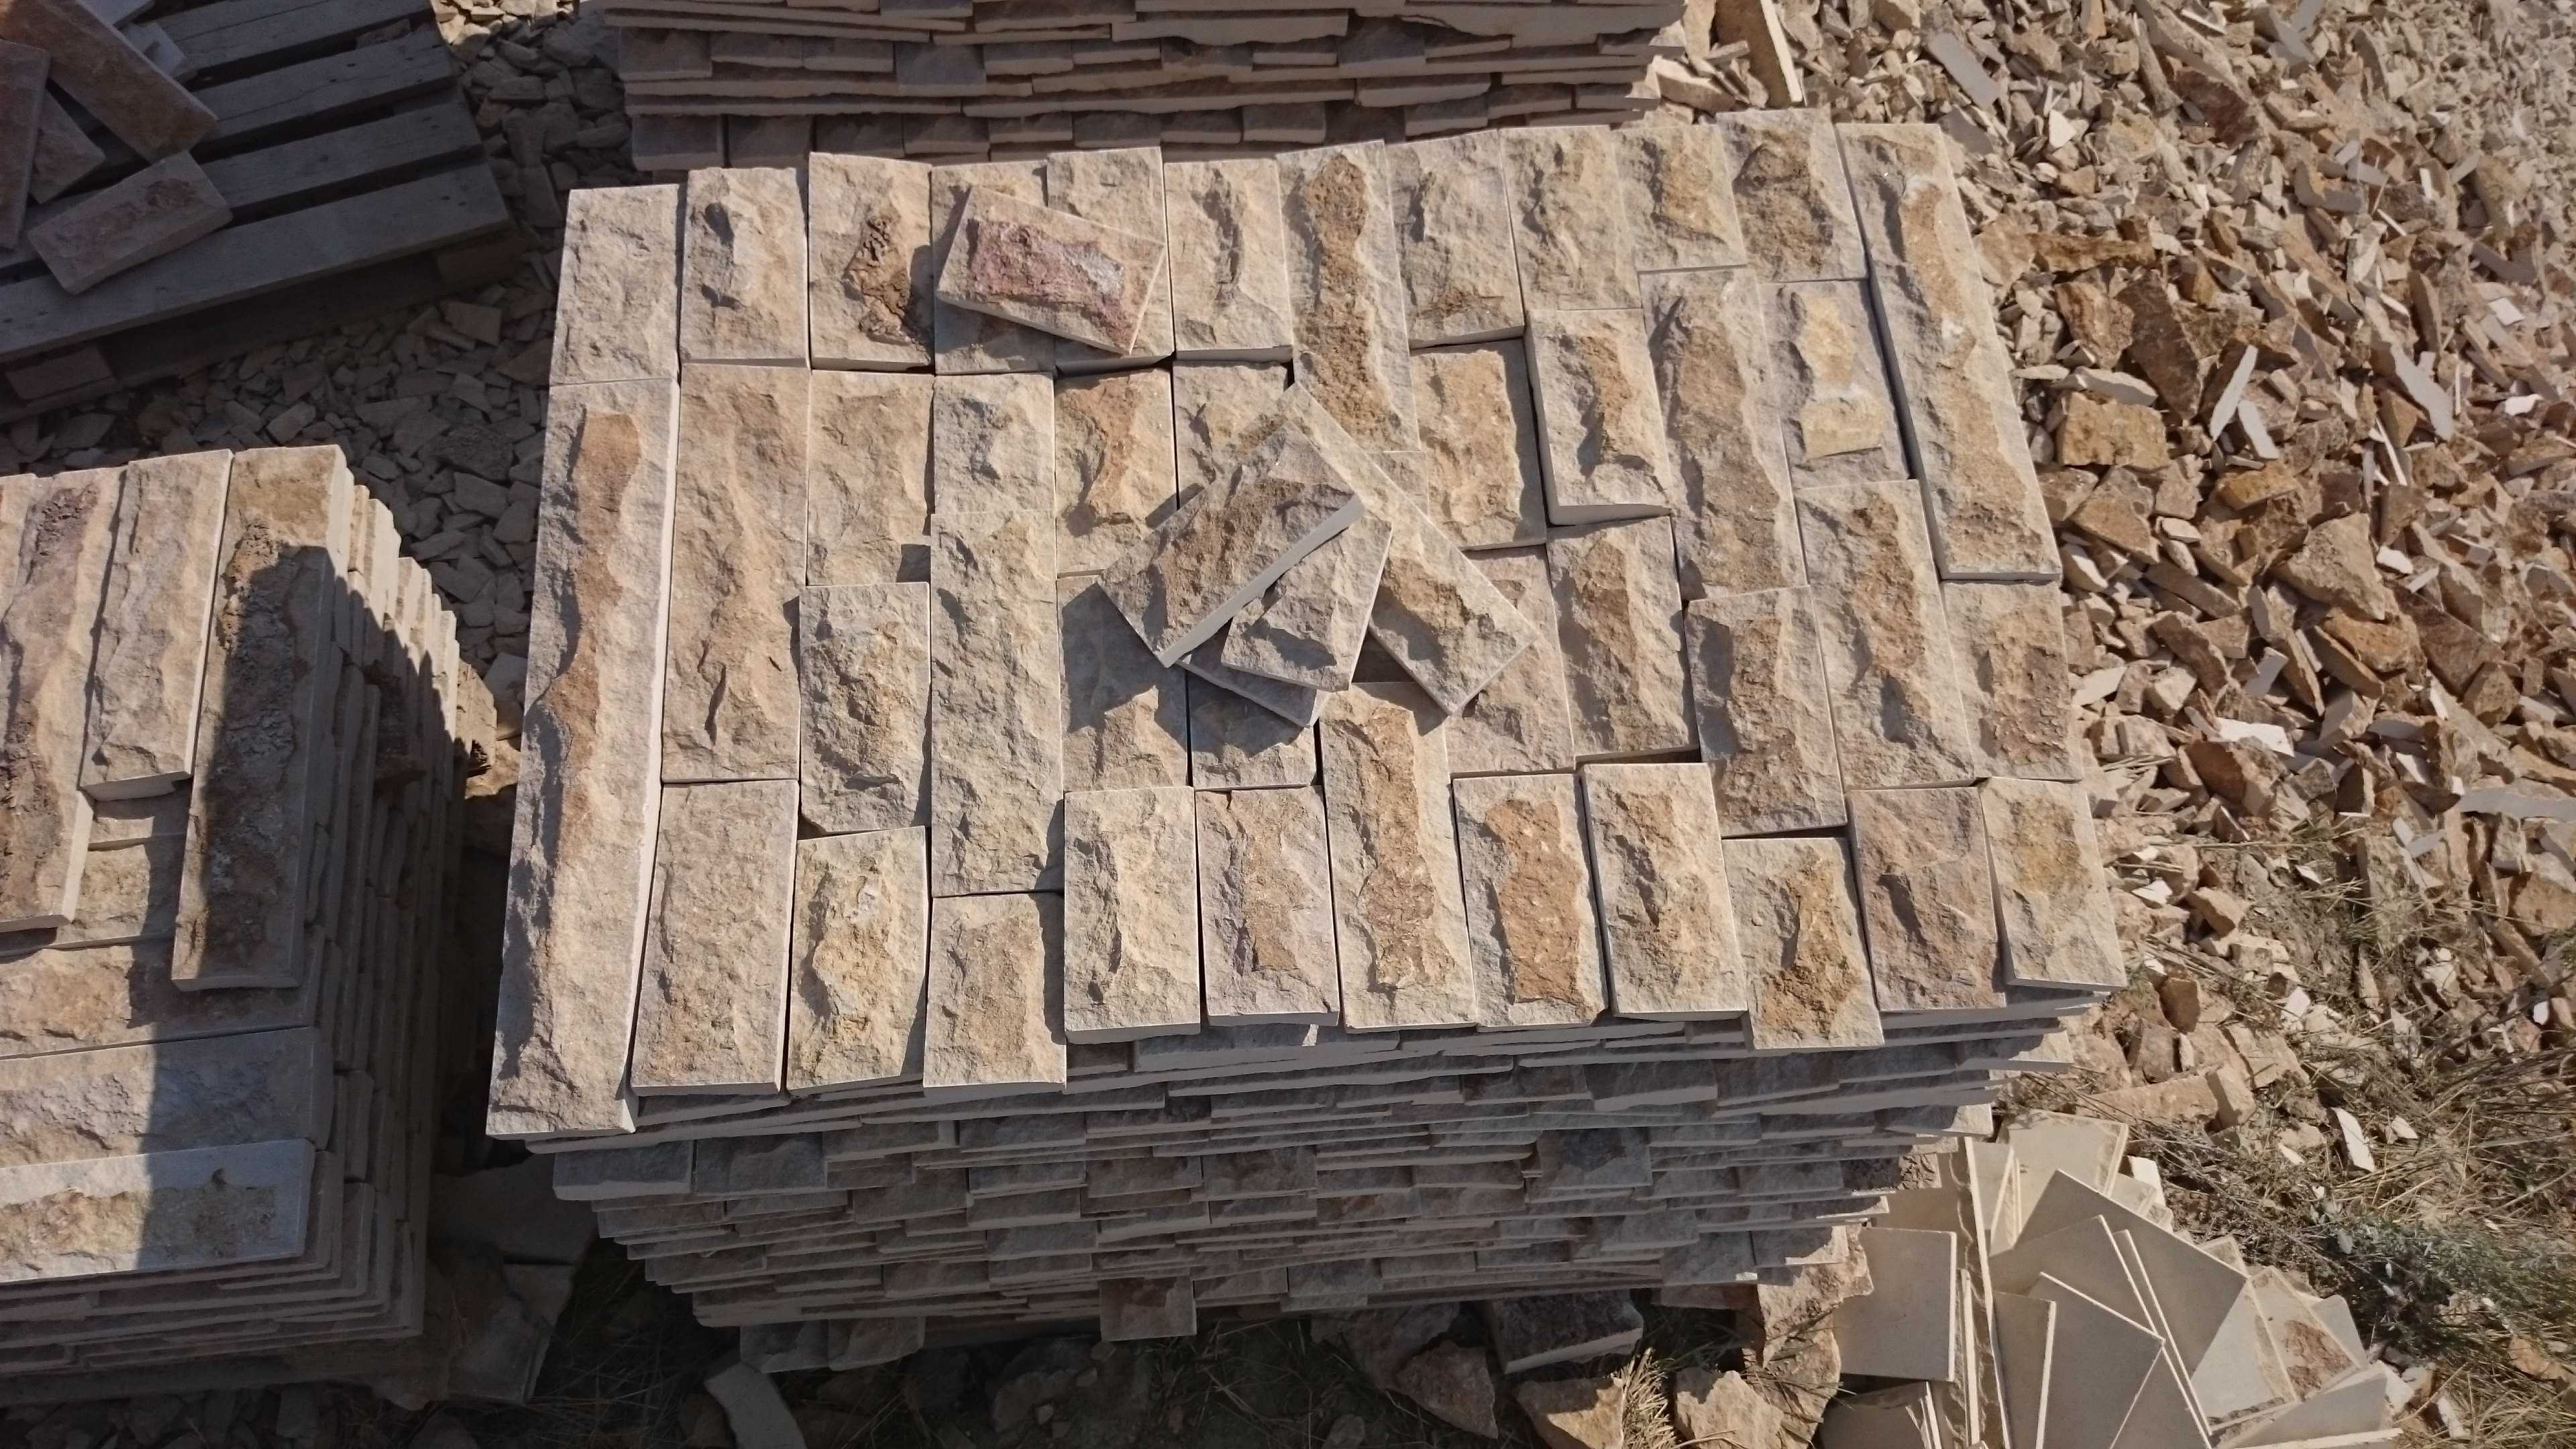 Облицовка фасада дагестанским камнем